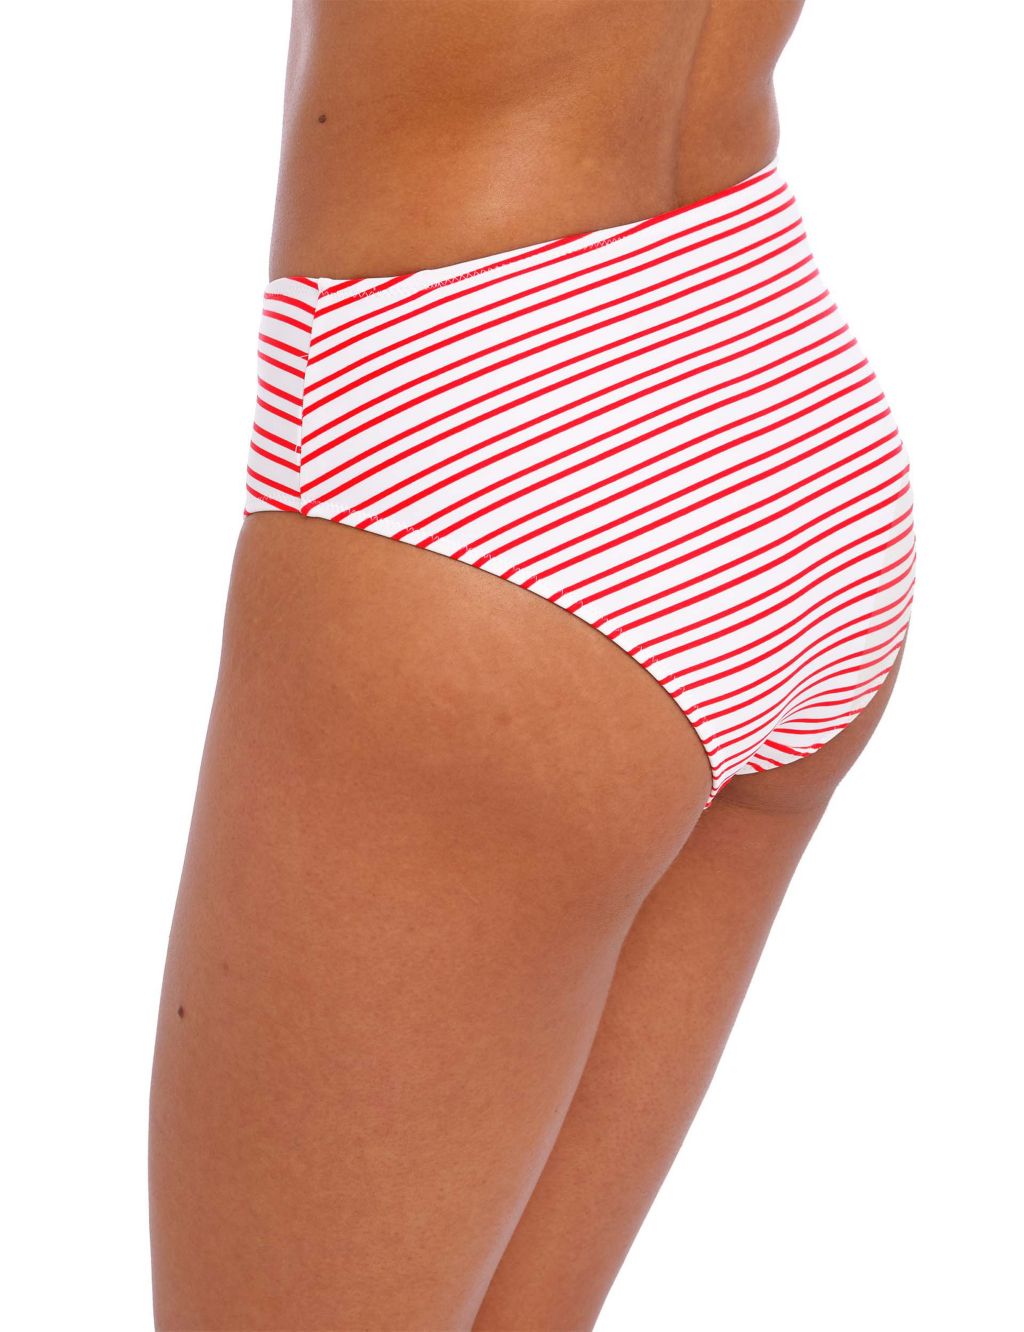 New Shores Striped Bikini Bottoms image 4